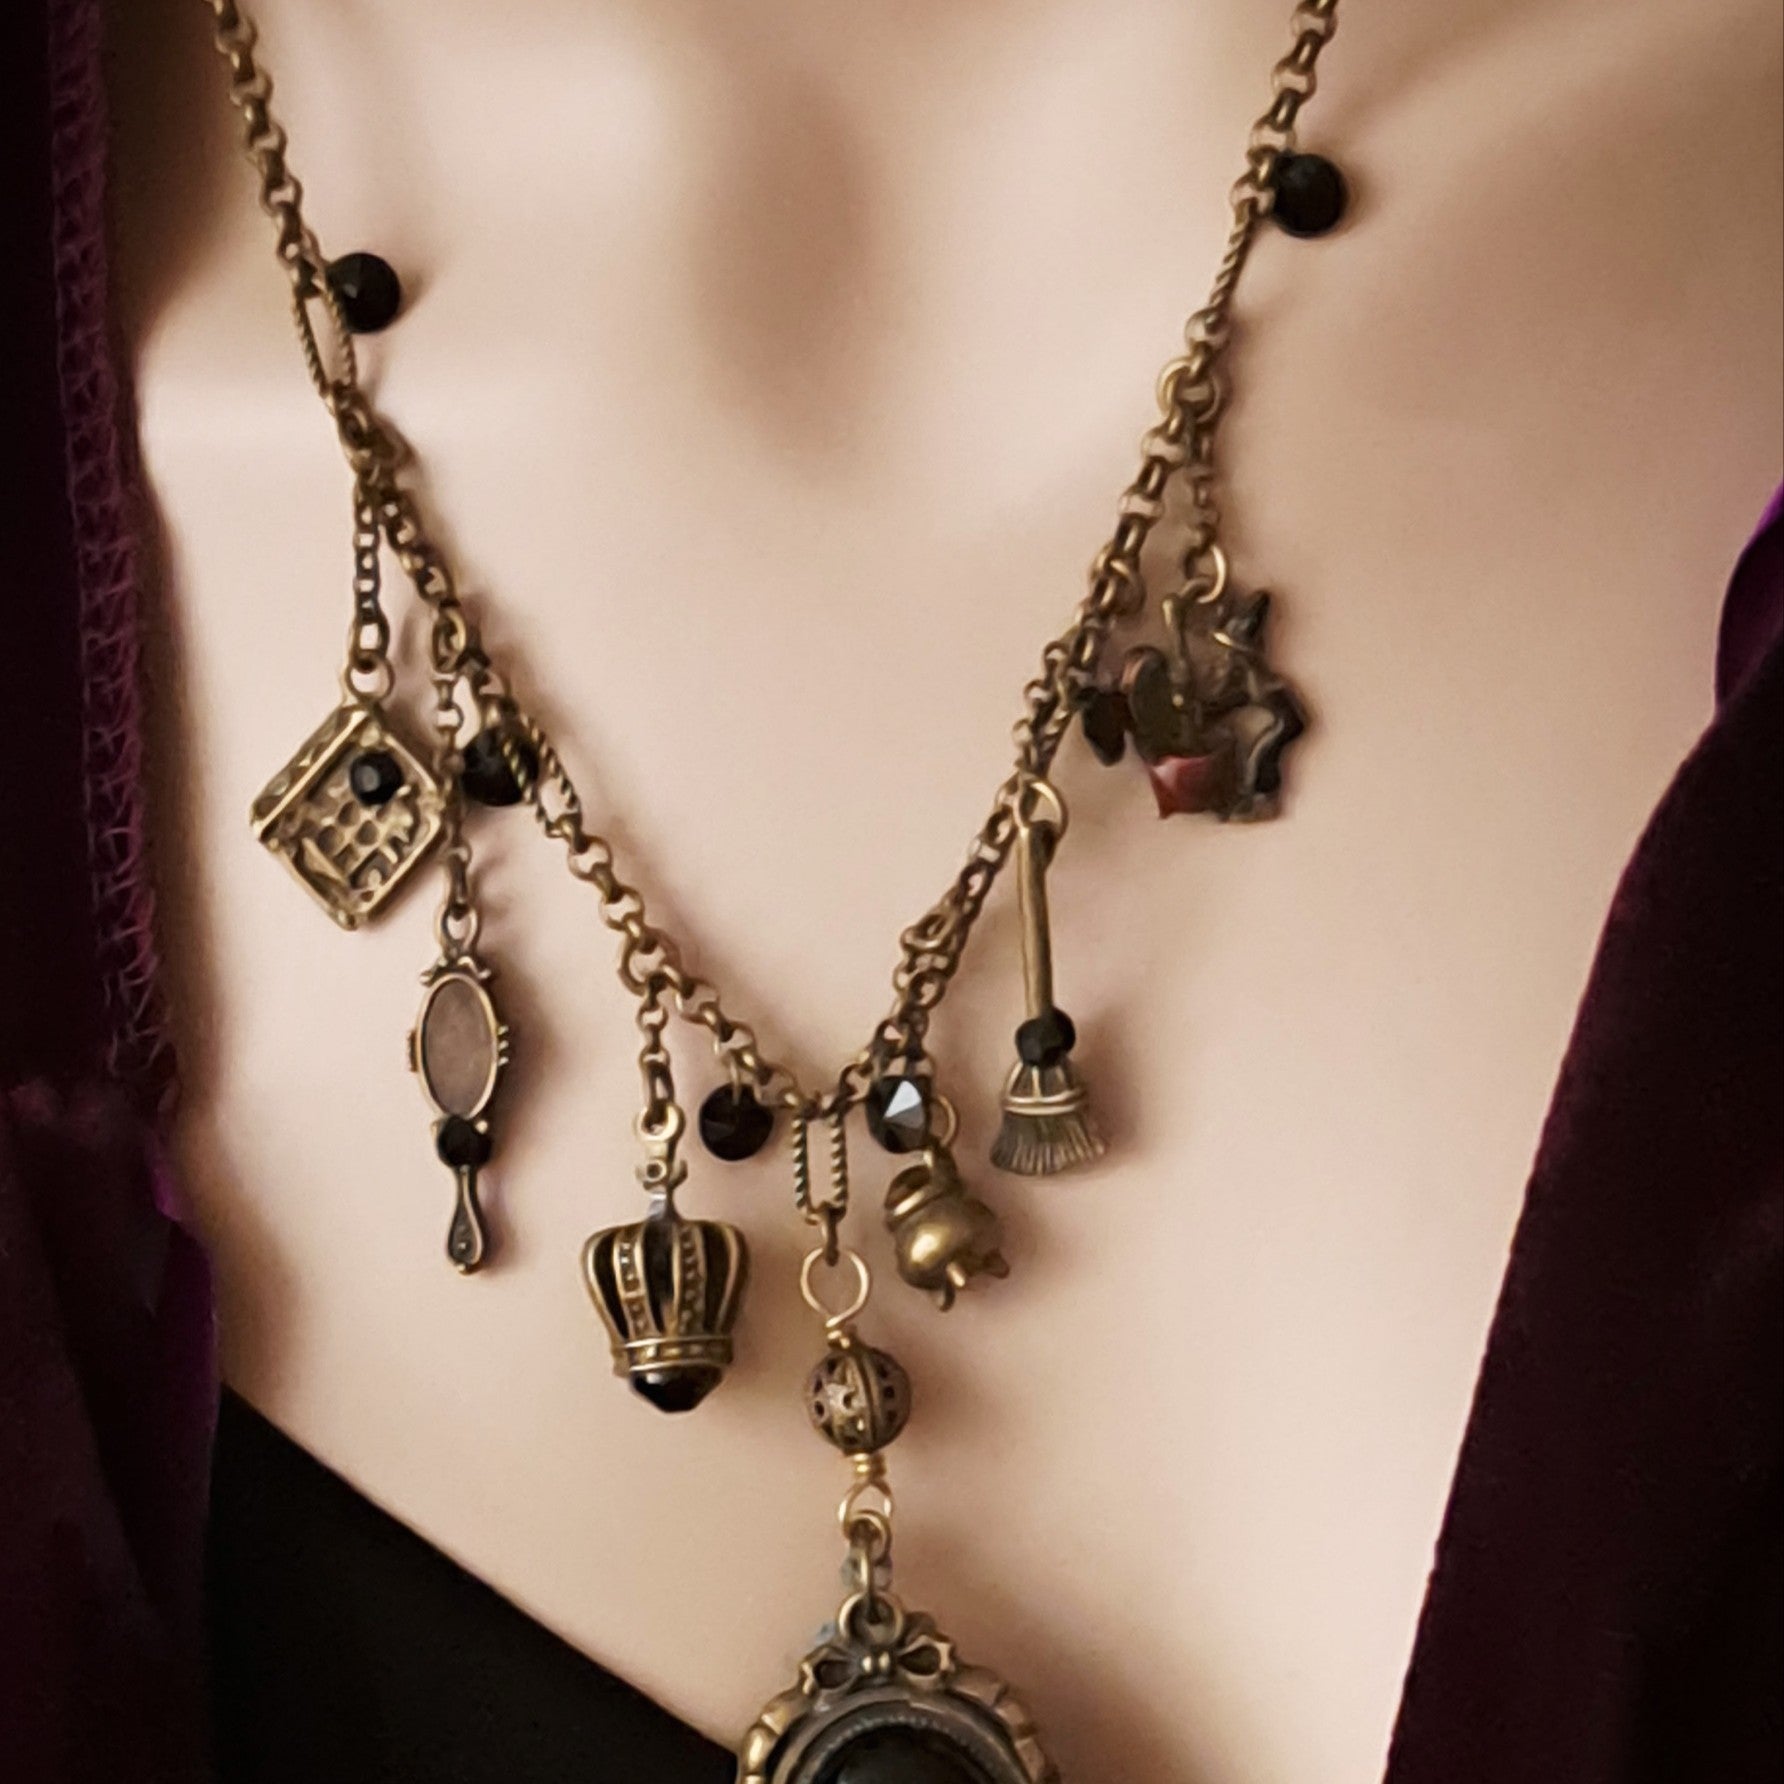 fairytale necklace